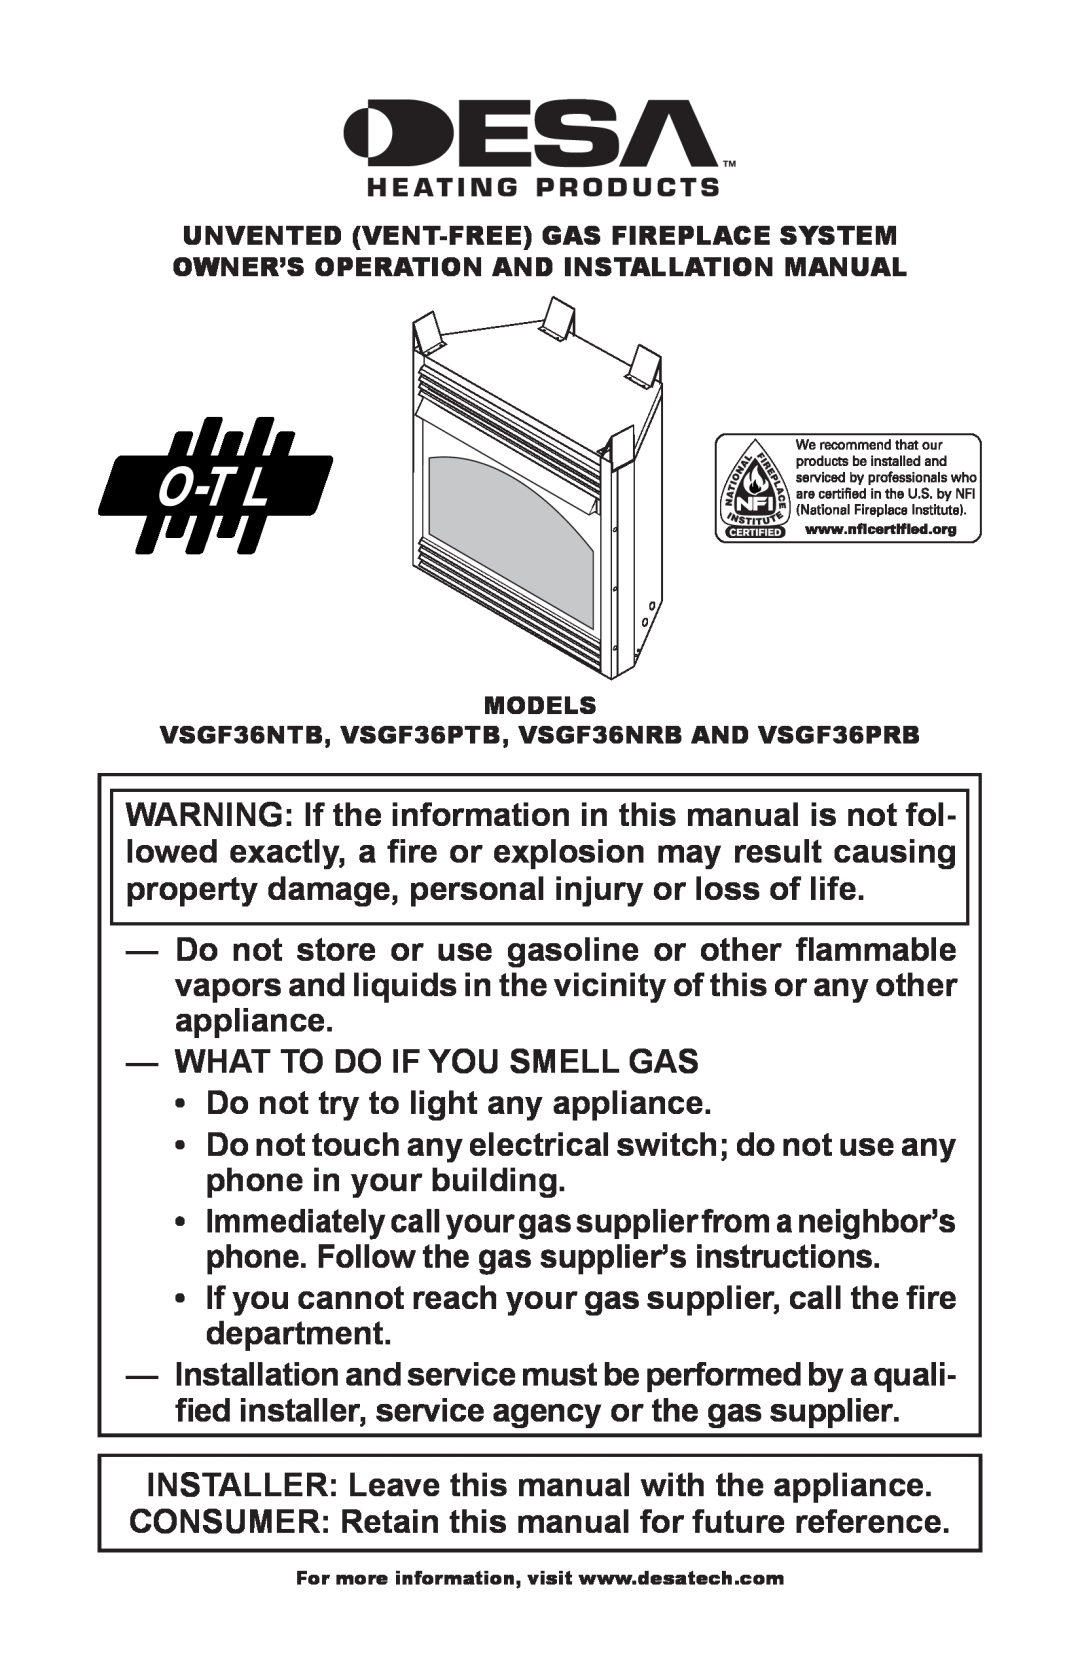 Desa VSGF36NTB, VSGF36PTB, VSGF36NRB, VSGF36PRB installation manual What To Do If You Smell Gas 